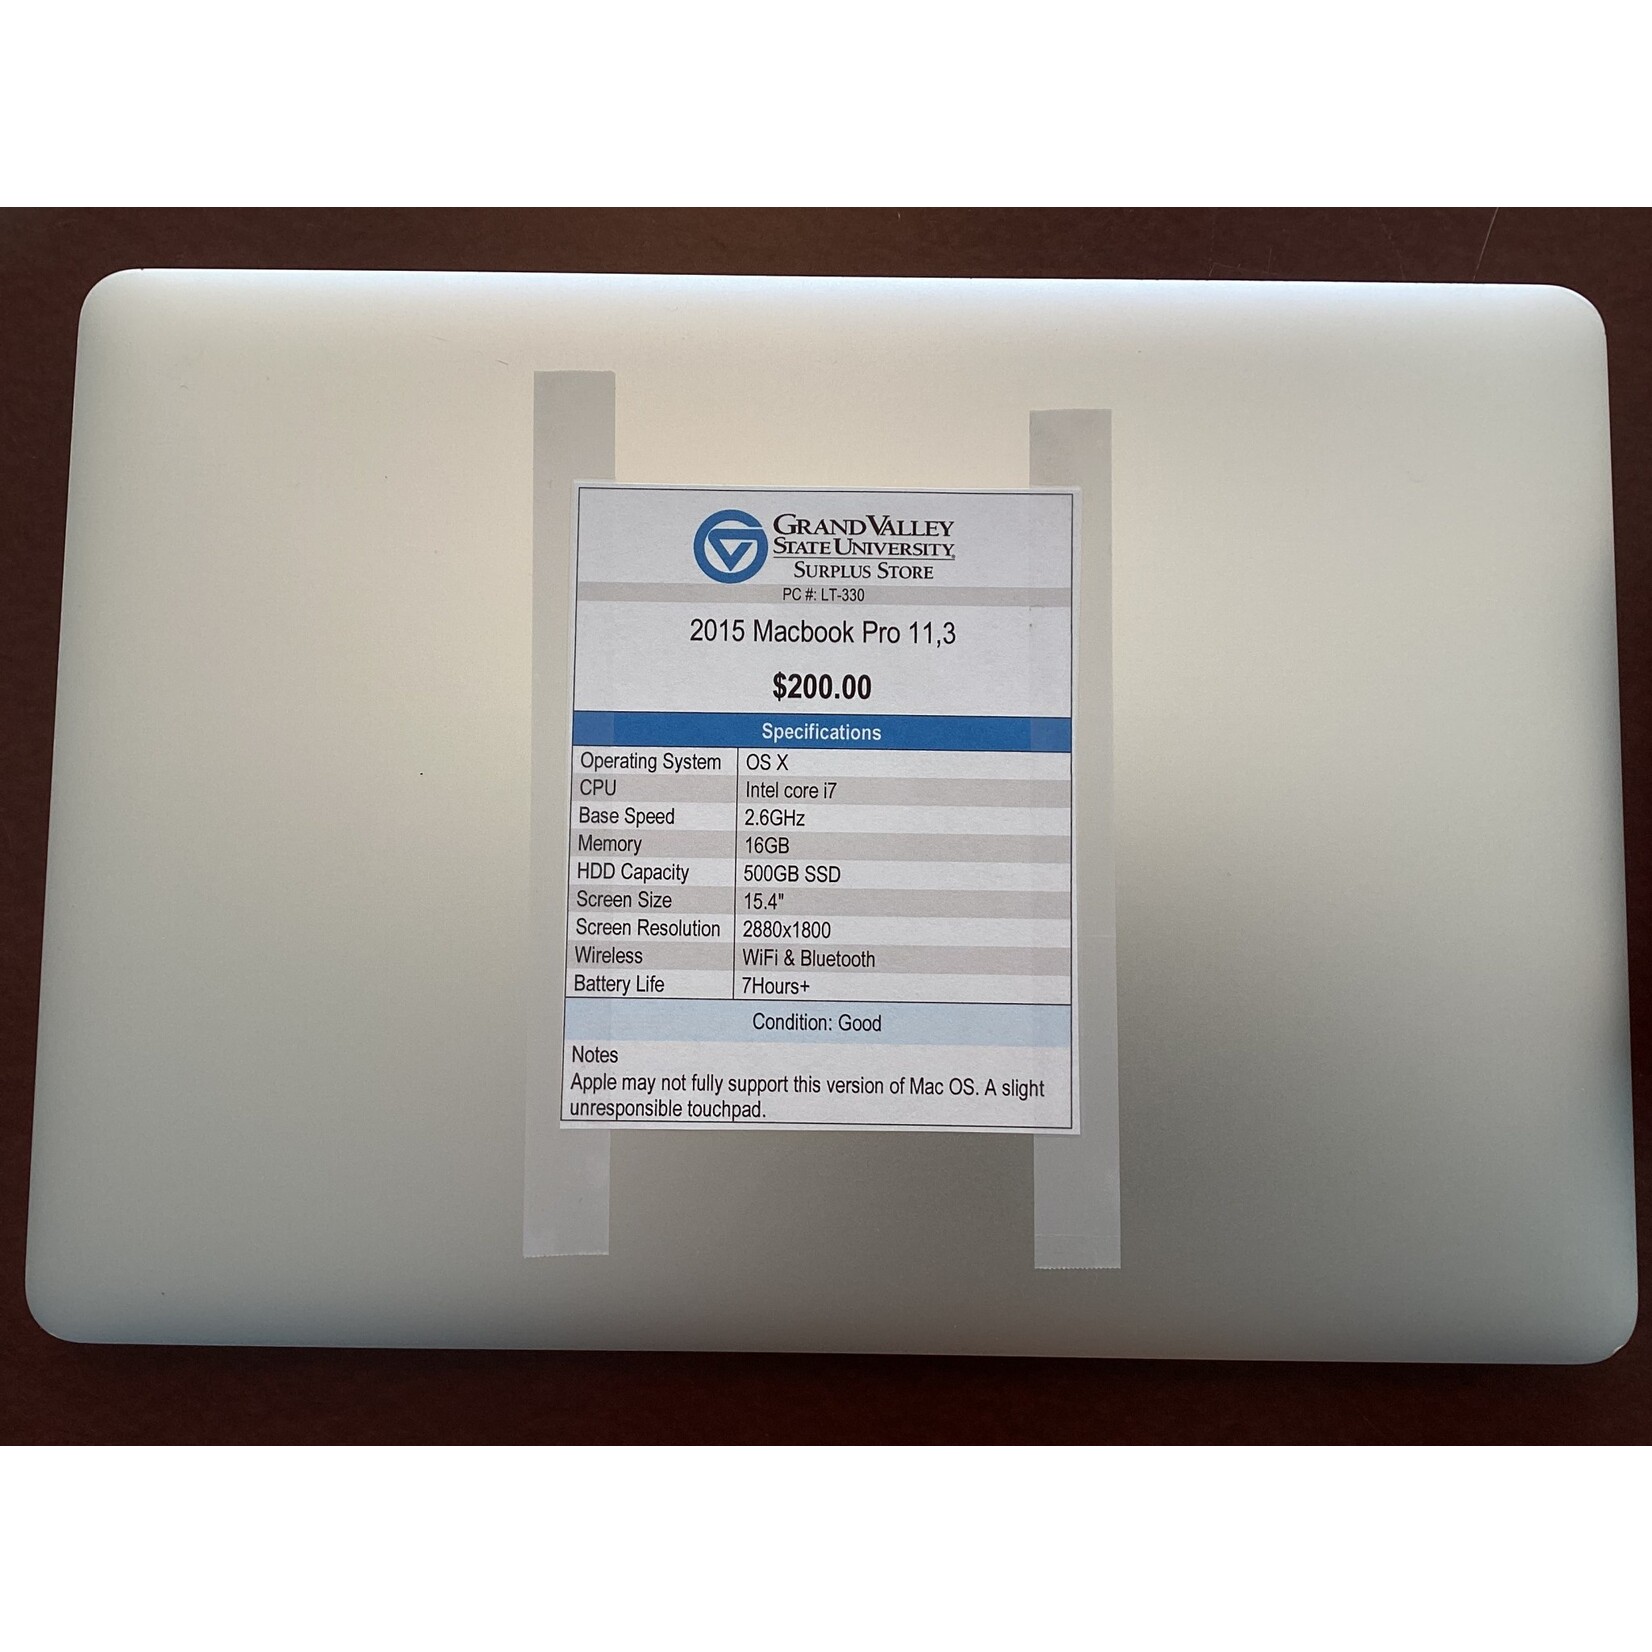 2015 Macbook Pro 11,3 (16GB, 500GB, 15.4" screen size)